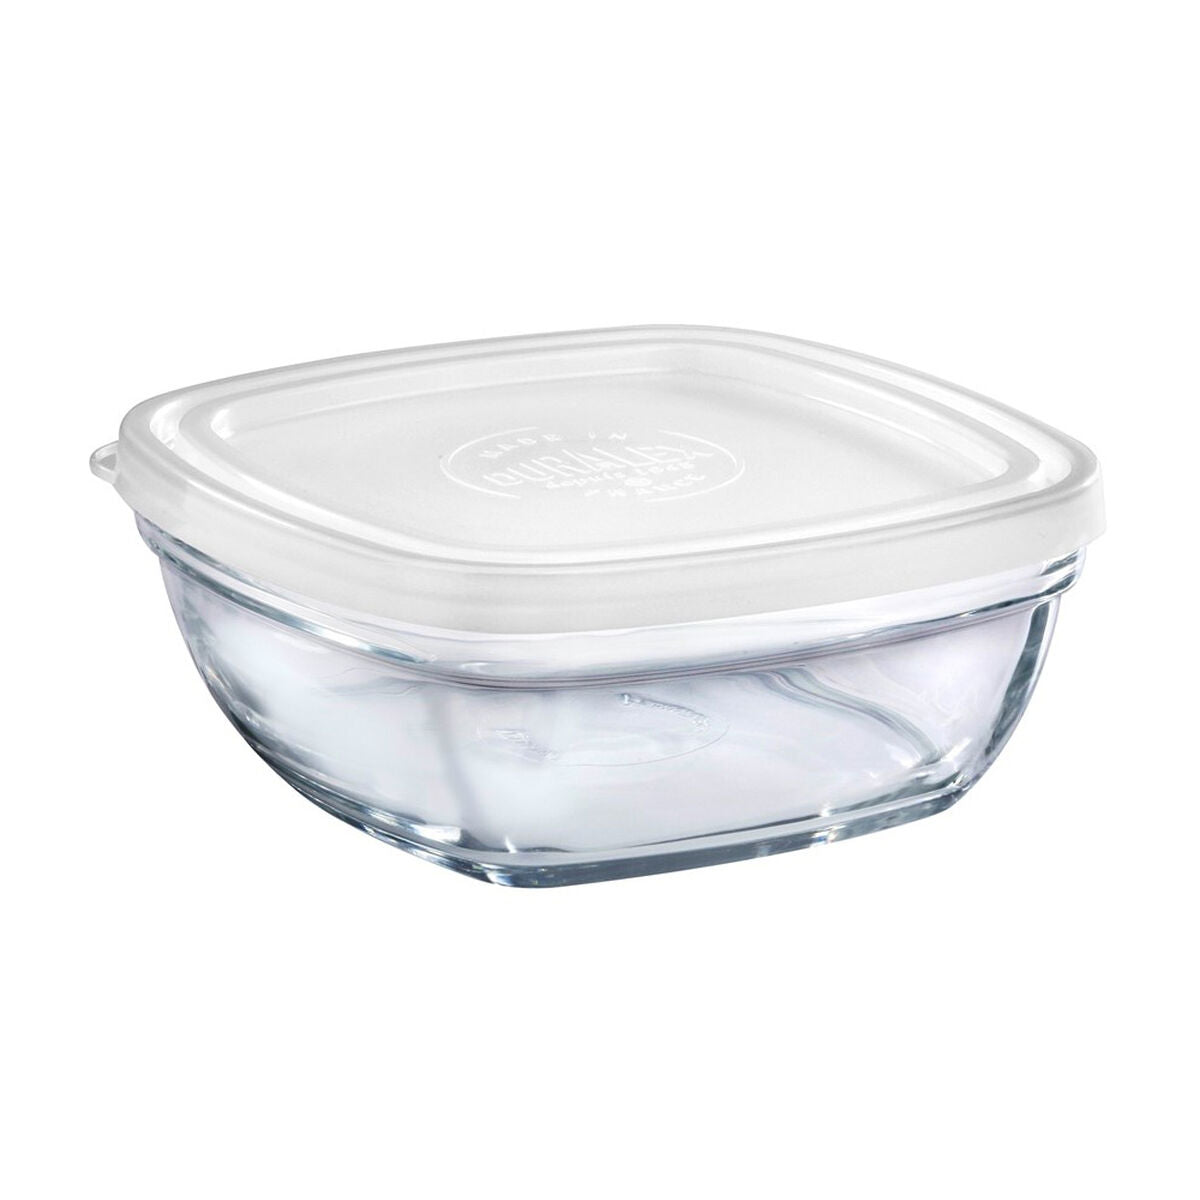 Lunchbox Freshbox Transparant Vierkant Met deksel (14 x 14 x 6 cm) (14 cm) (14 cm)